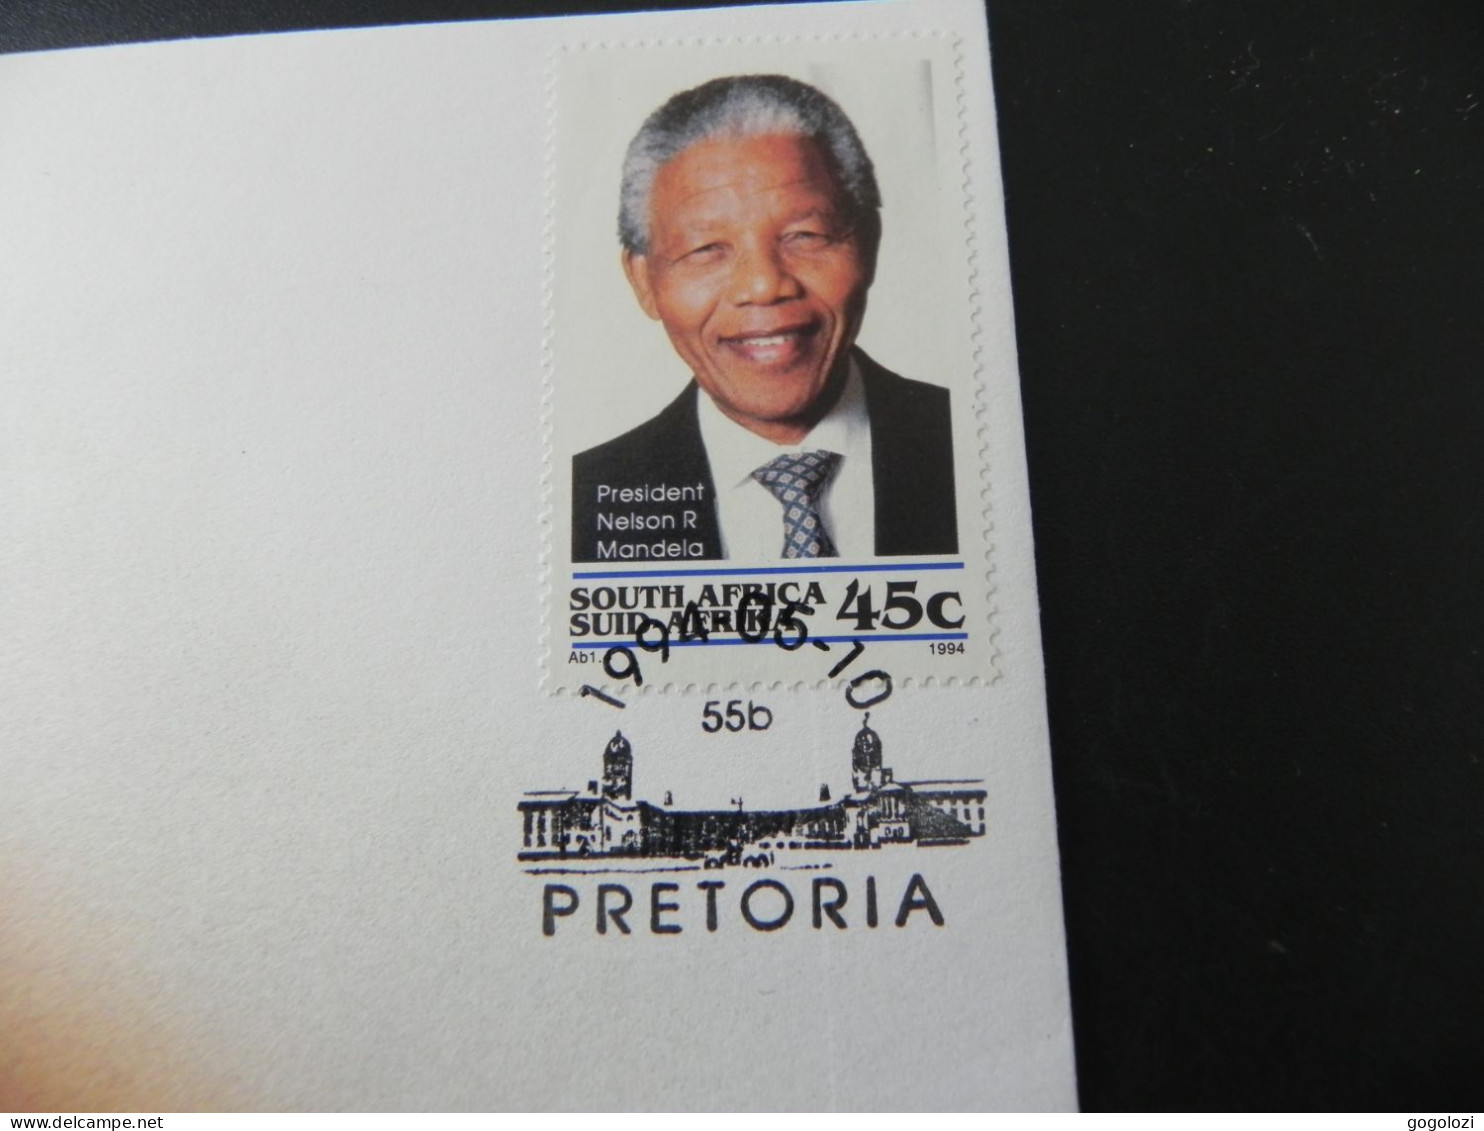 South Africa 5 Rand 1994 Presidential Inauguration Nelson Mandela  - Numis Letter - Südafrika